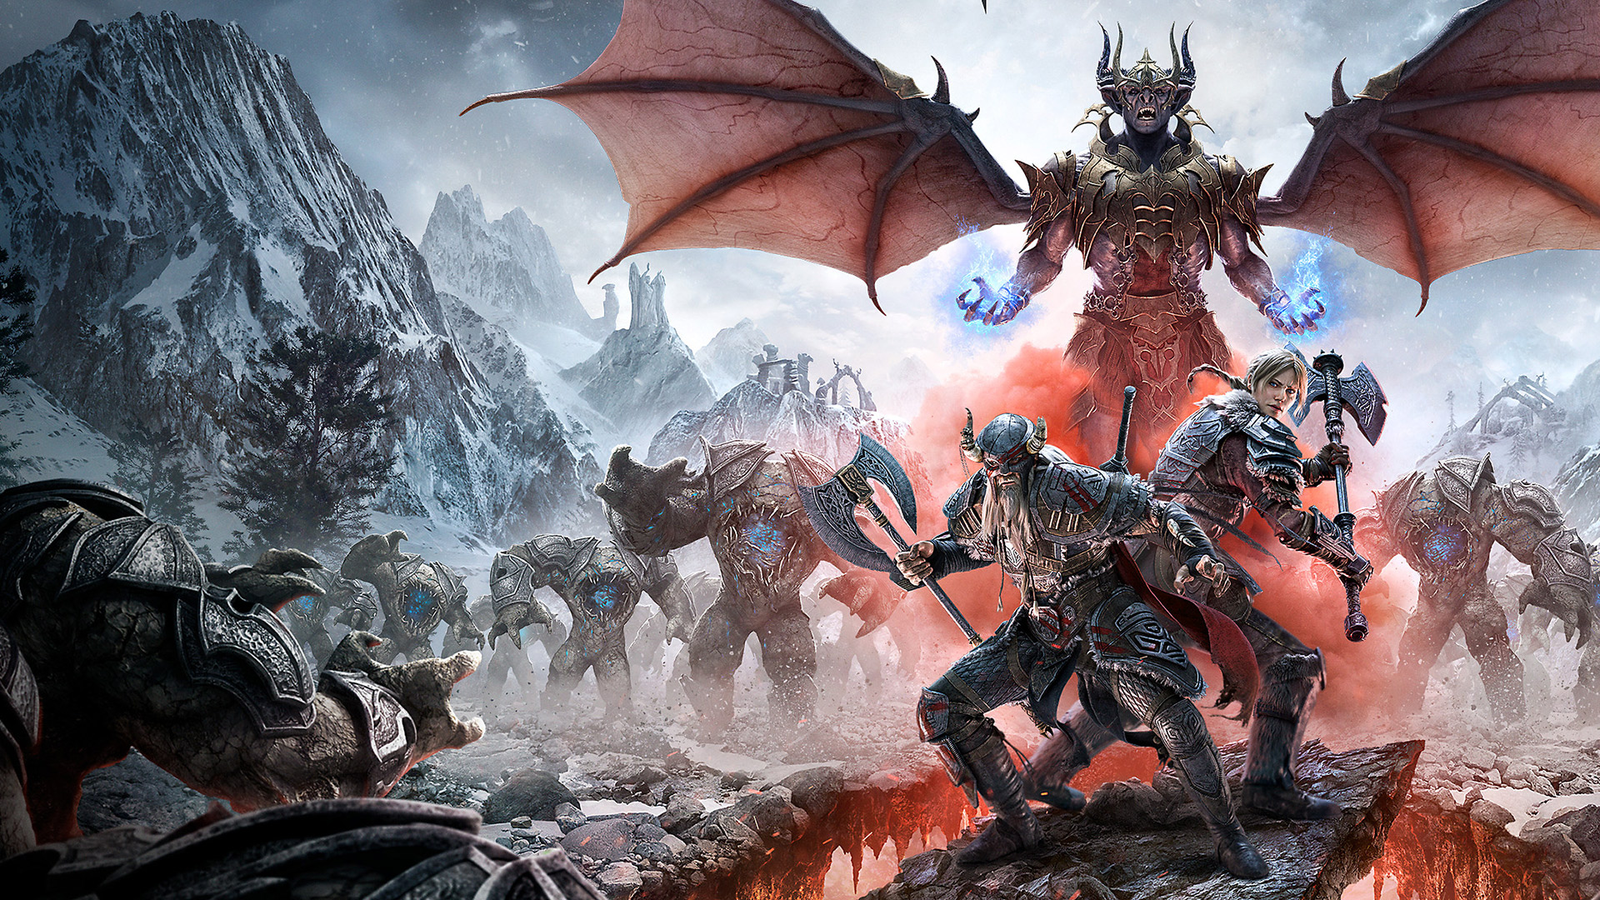 Elder Scrolls 6 release date update - Bethesda delivers bad news for fans, Gaming, Entertainment